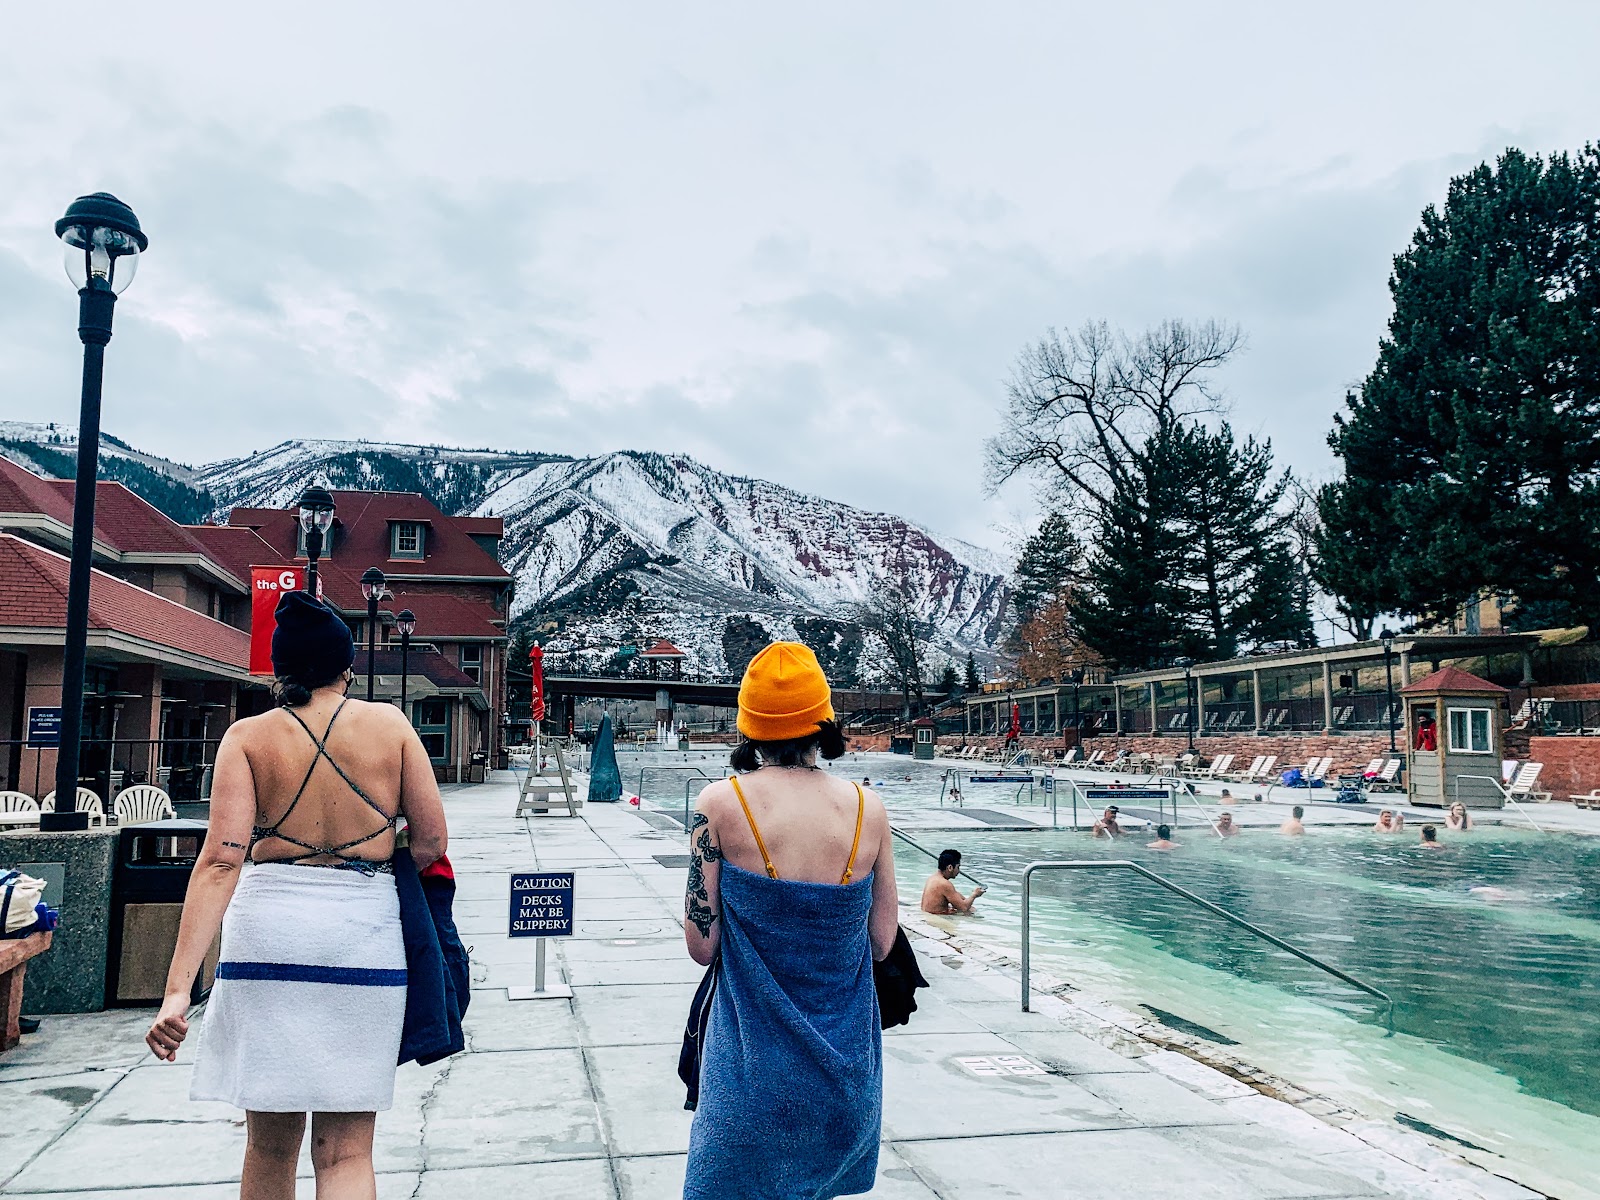 Hot spring in Durango